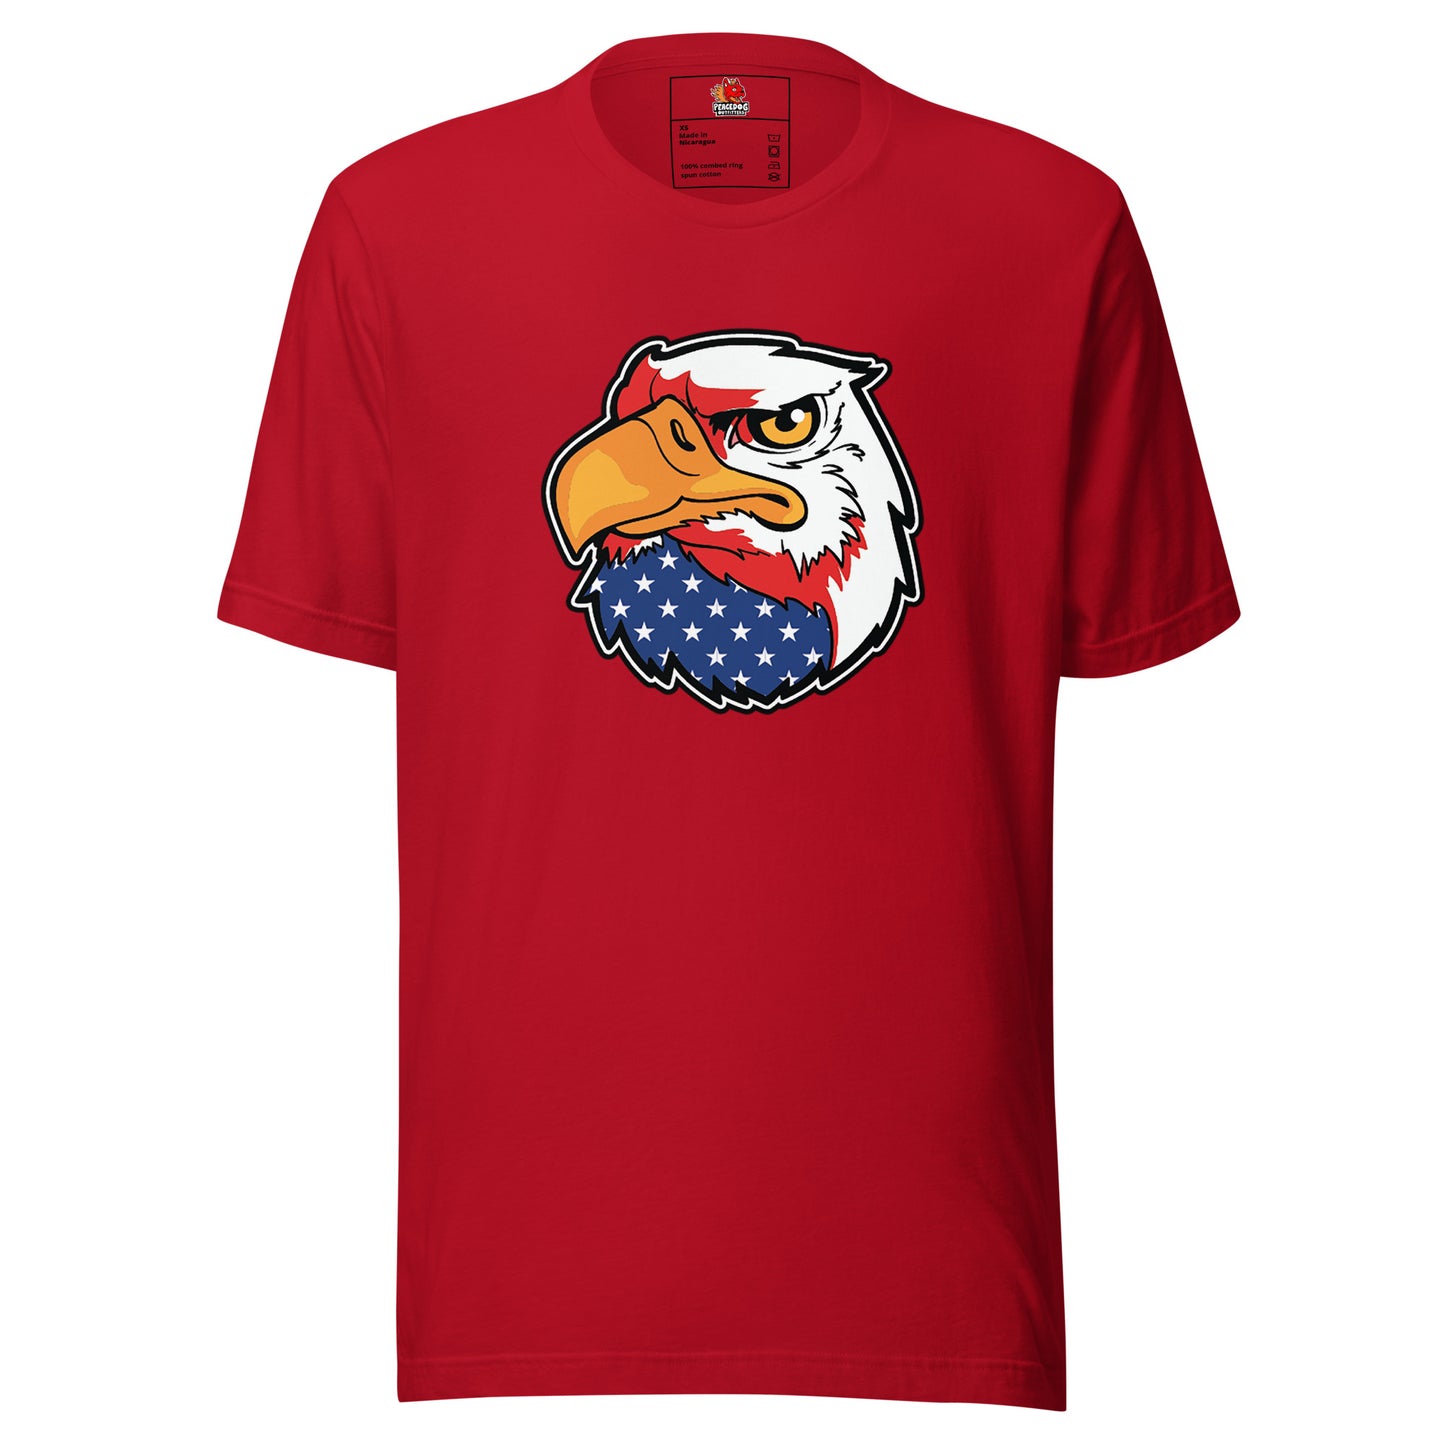 Bald Eagle with Stars T-shirt